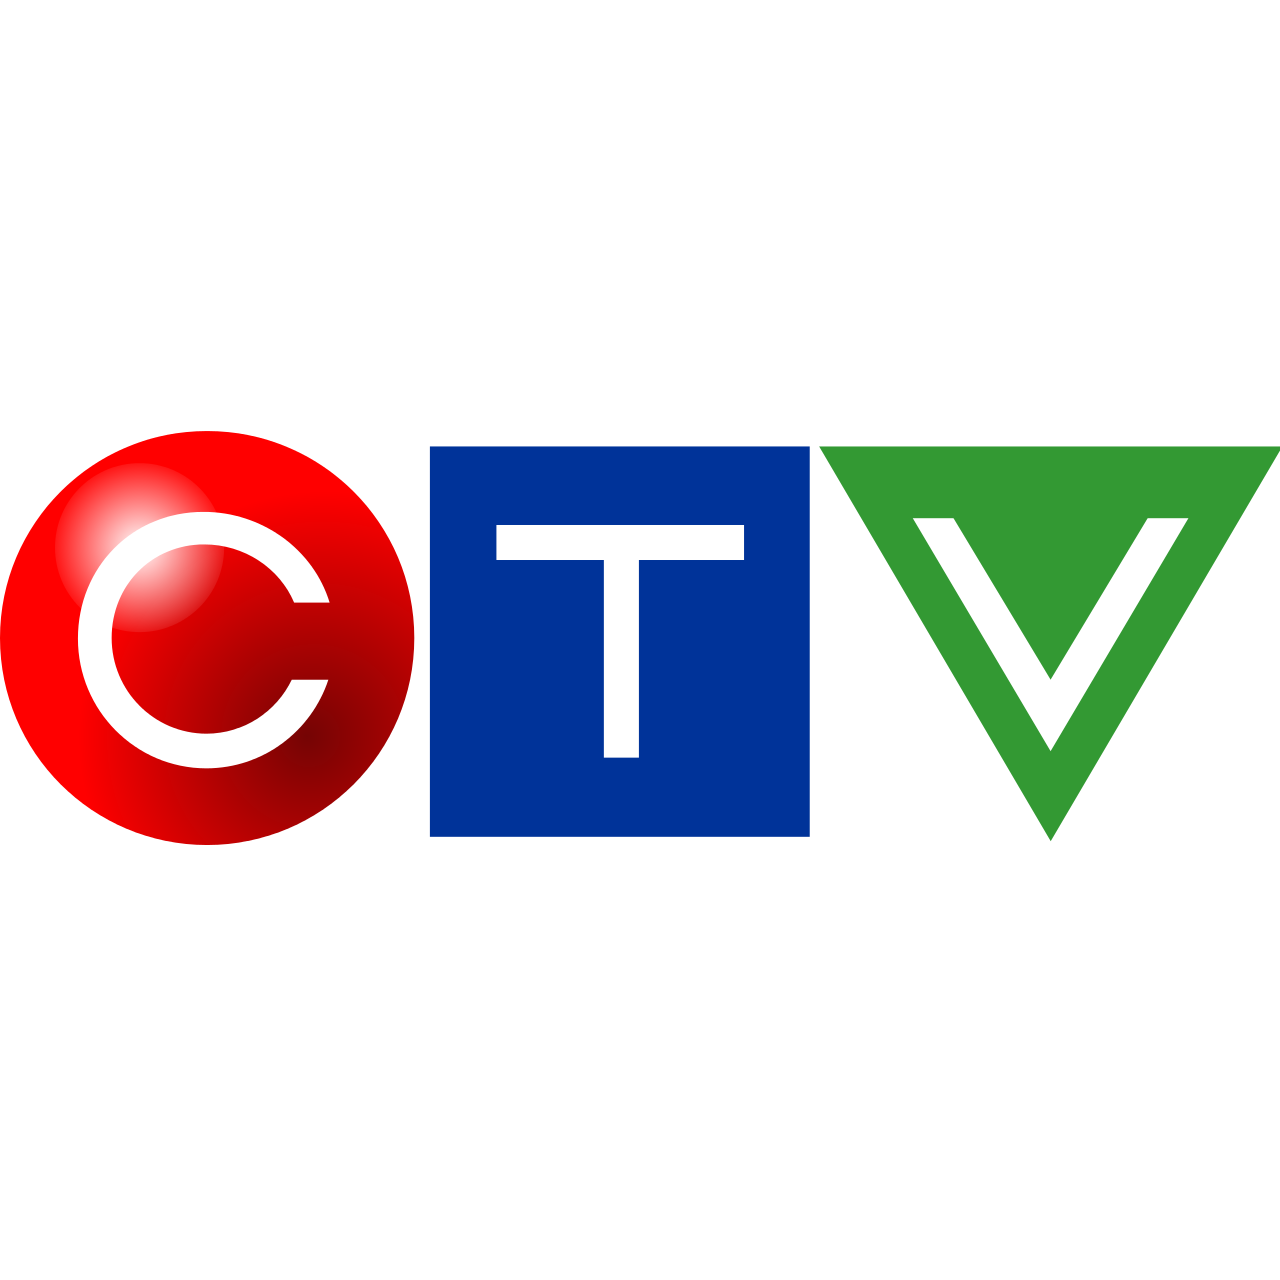 CTV Toronto